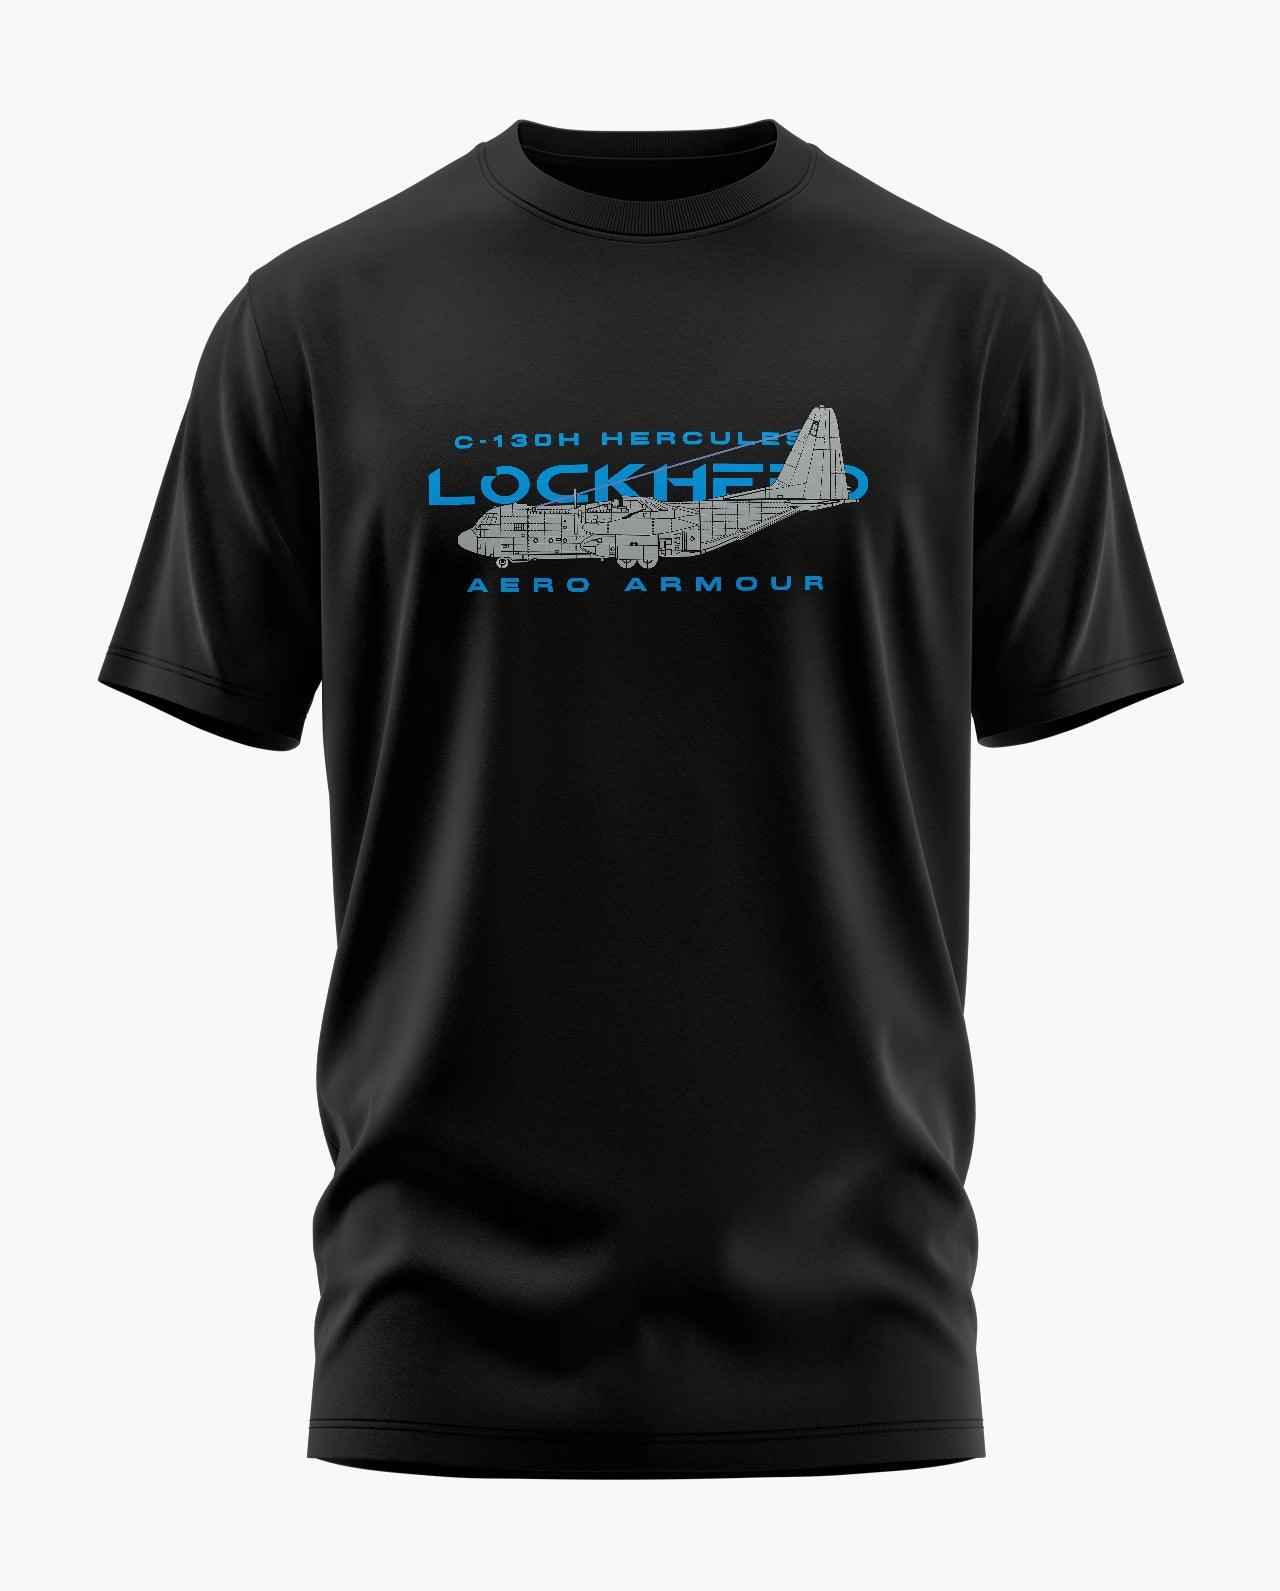 Lockheed Hercules T-Shirt - Aero Armour